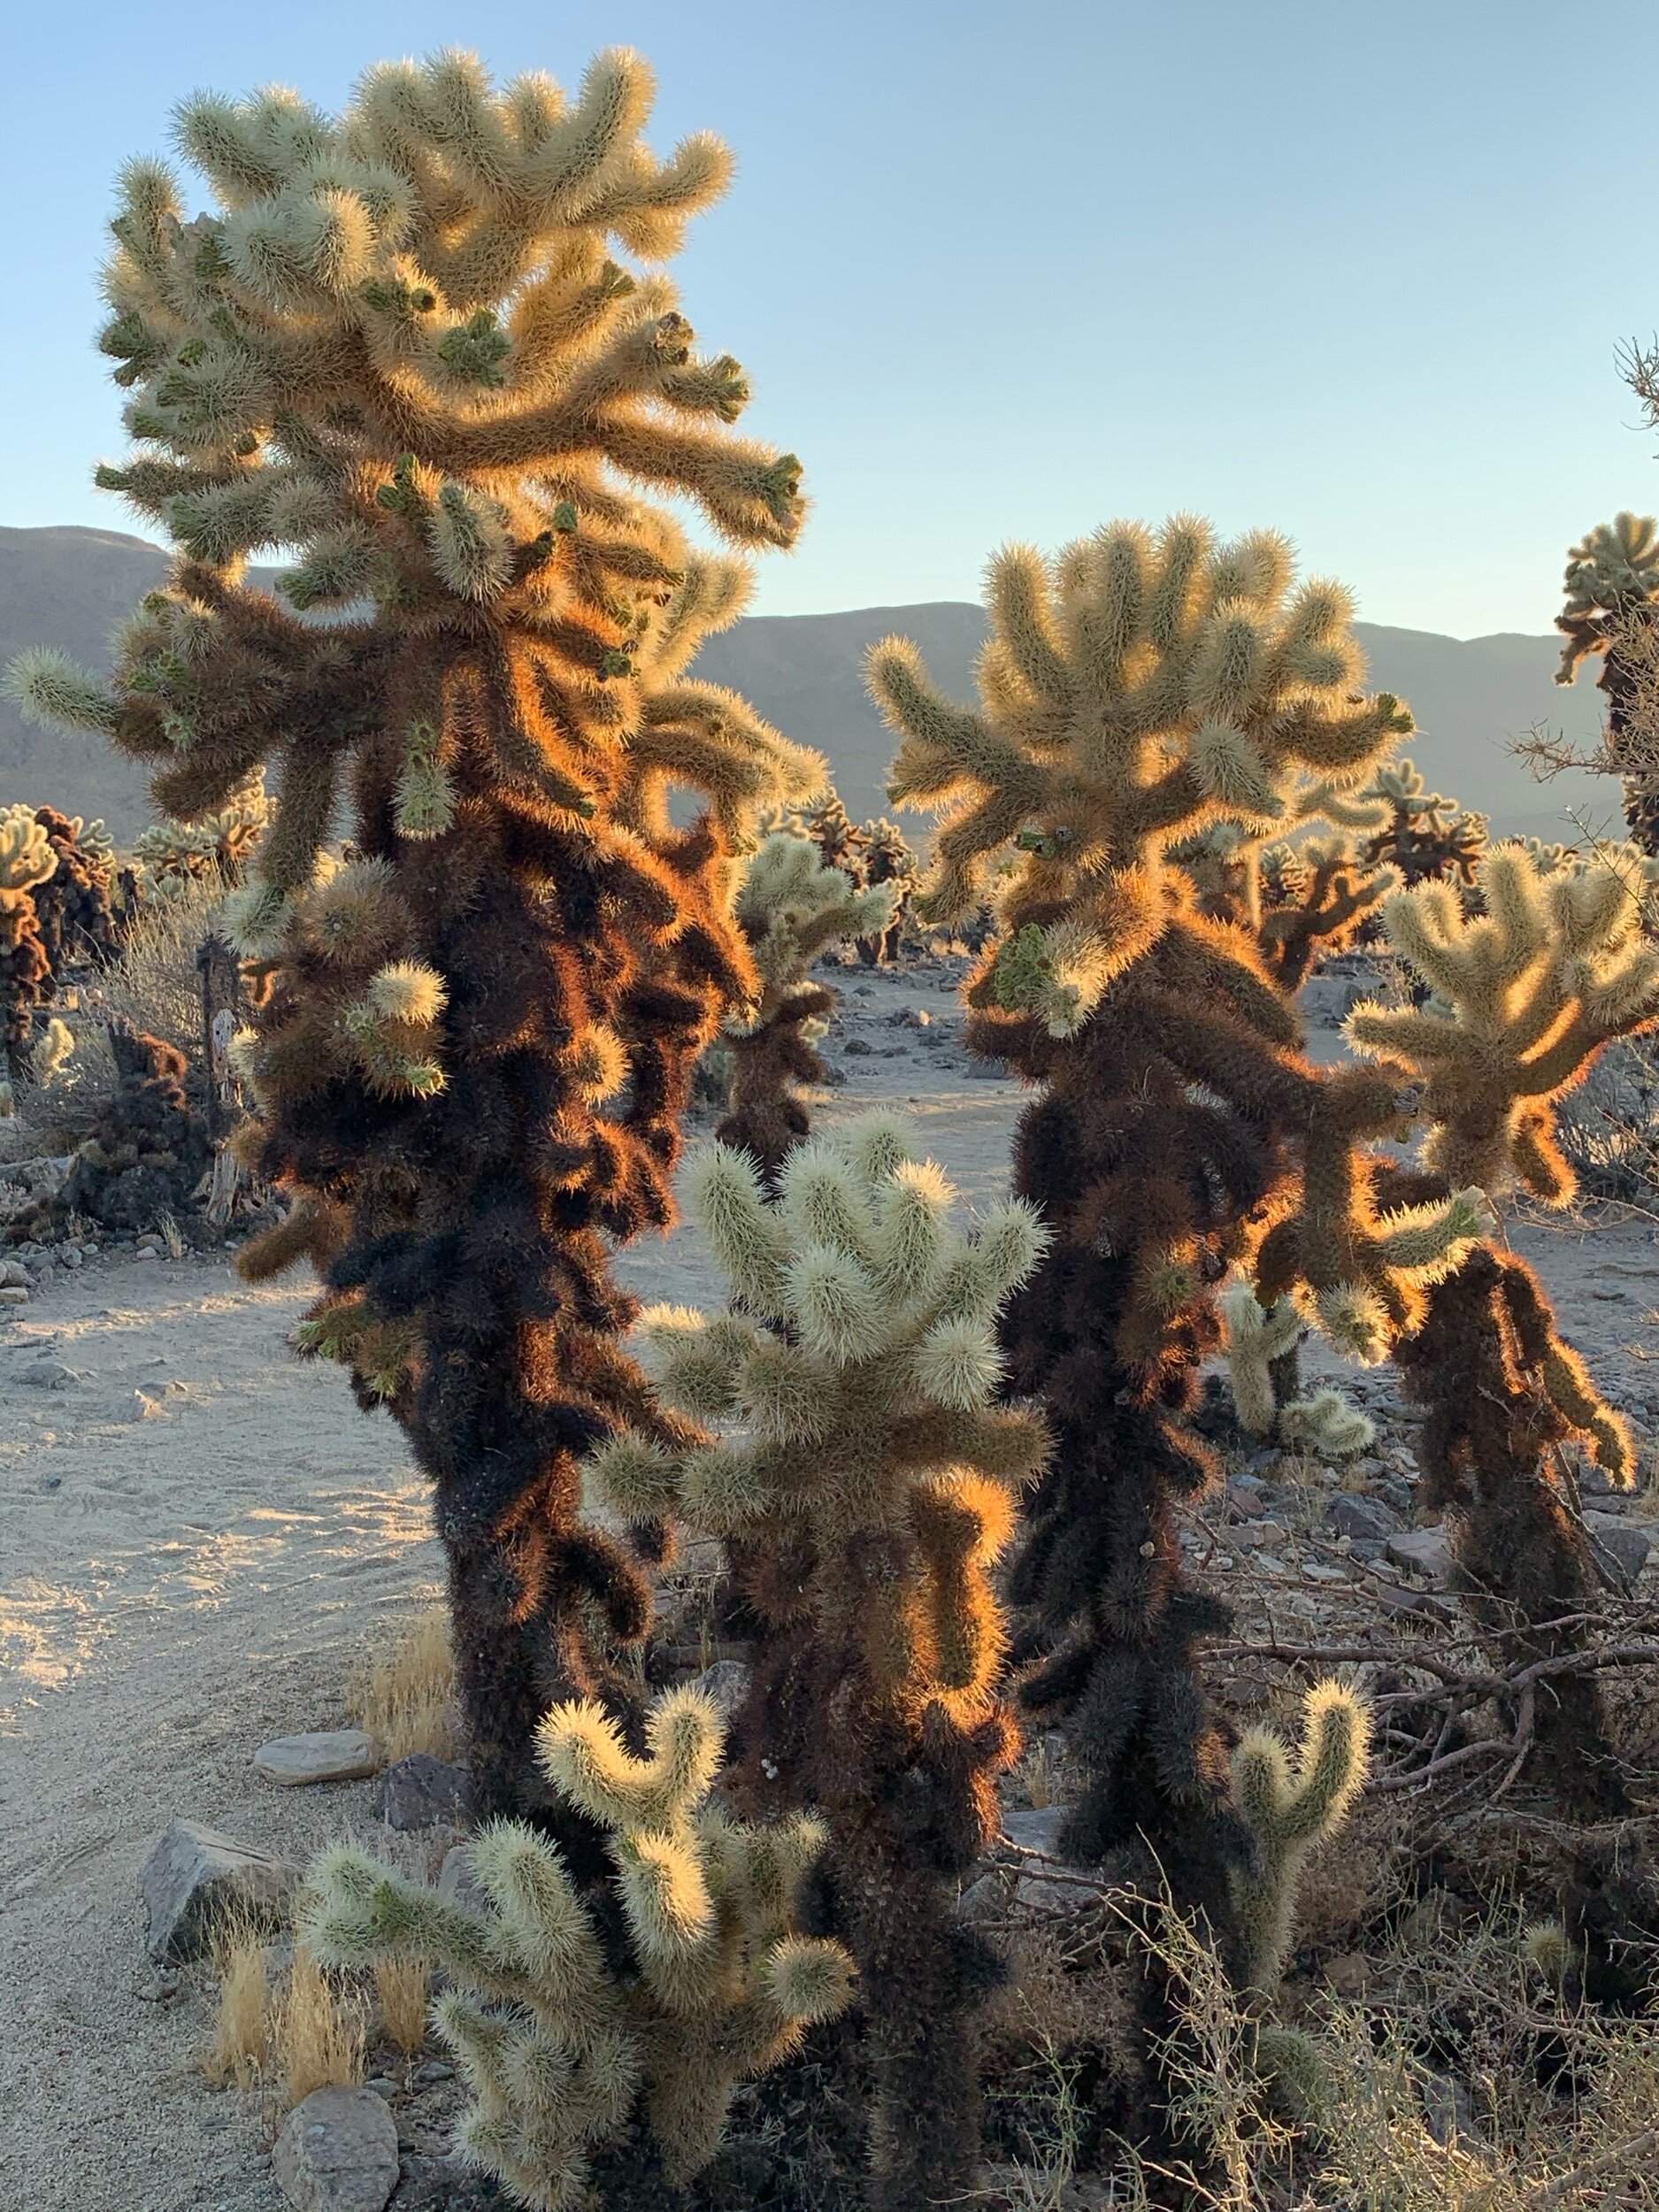  The  Teddy Bear   Cholla  cacti in Joshua Tree NP are unusual and beautiful.  